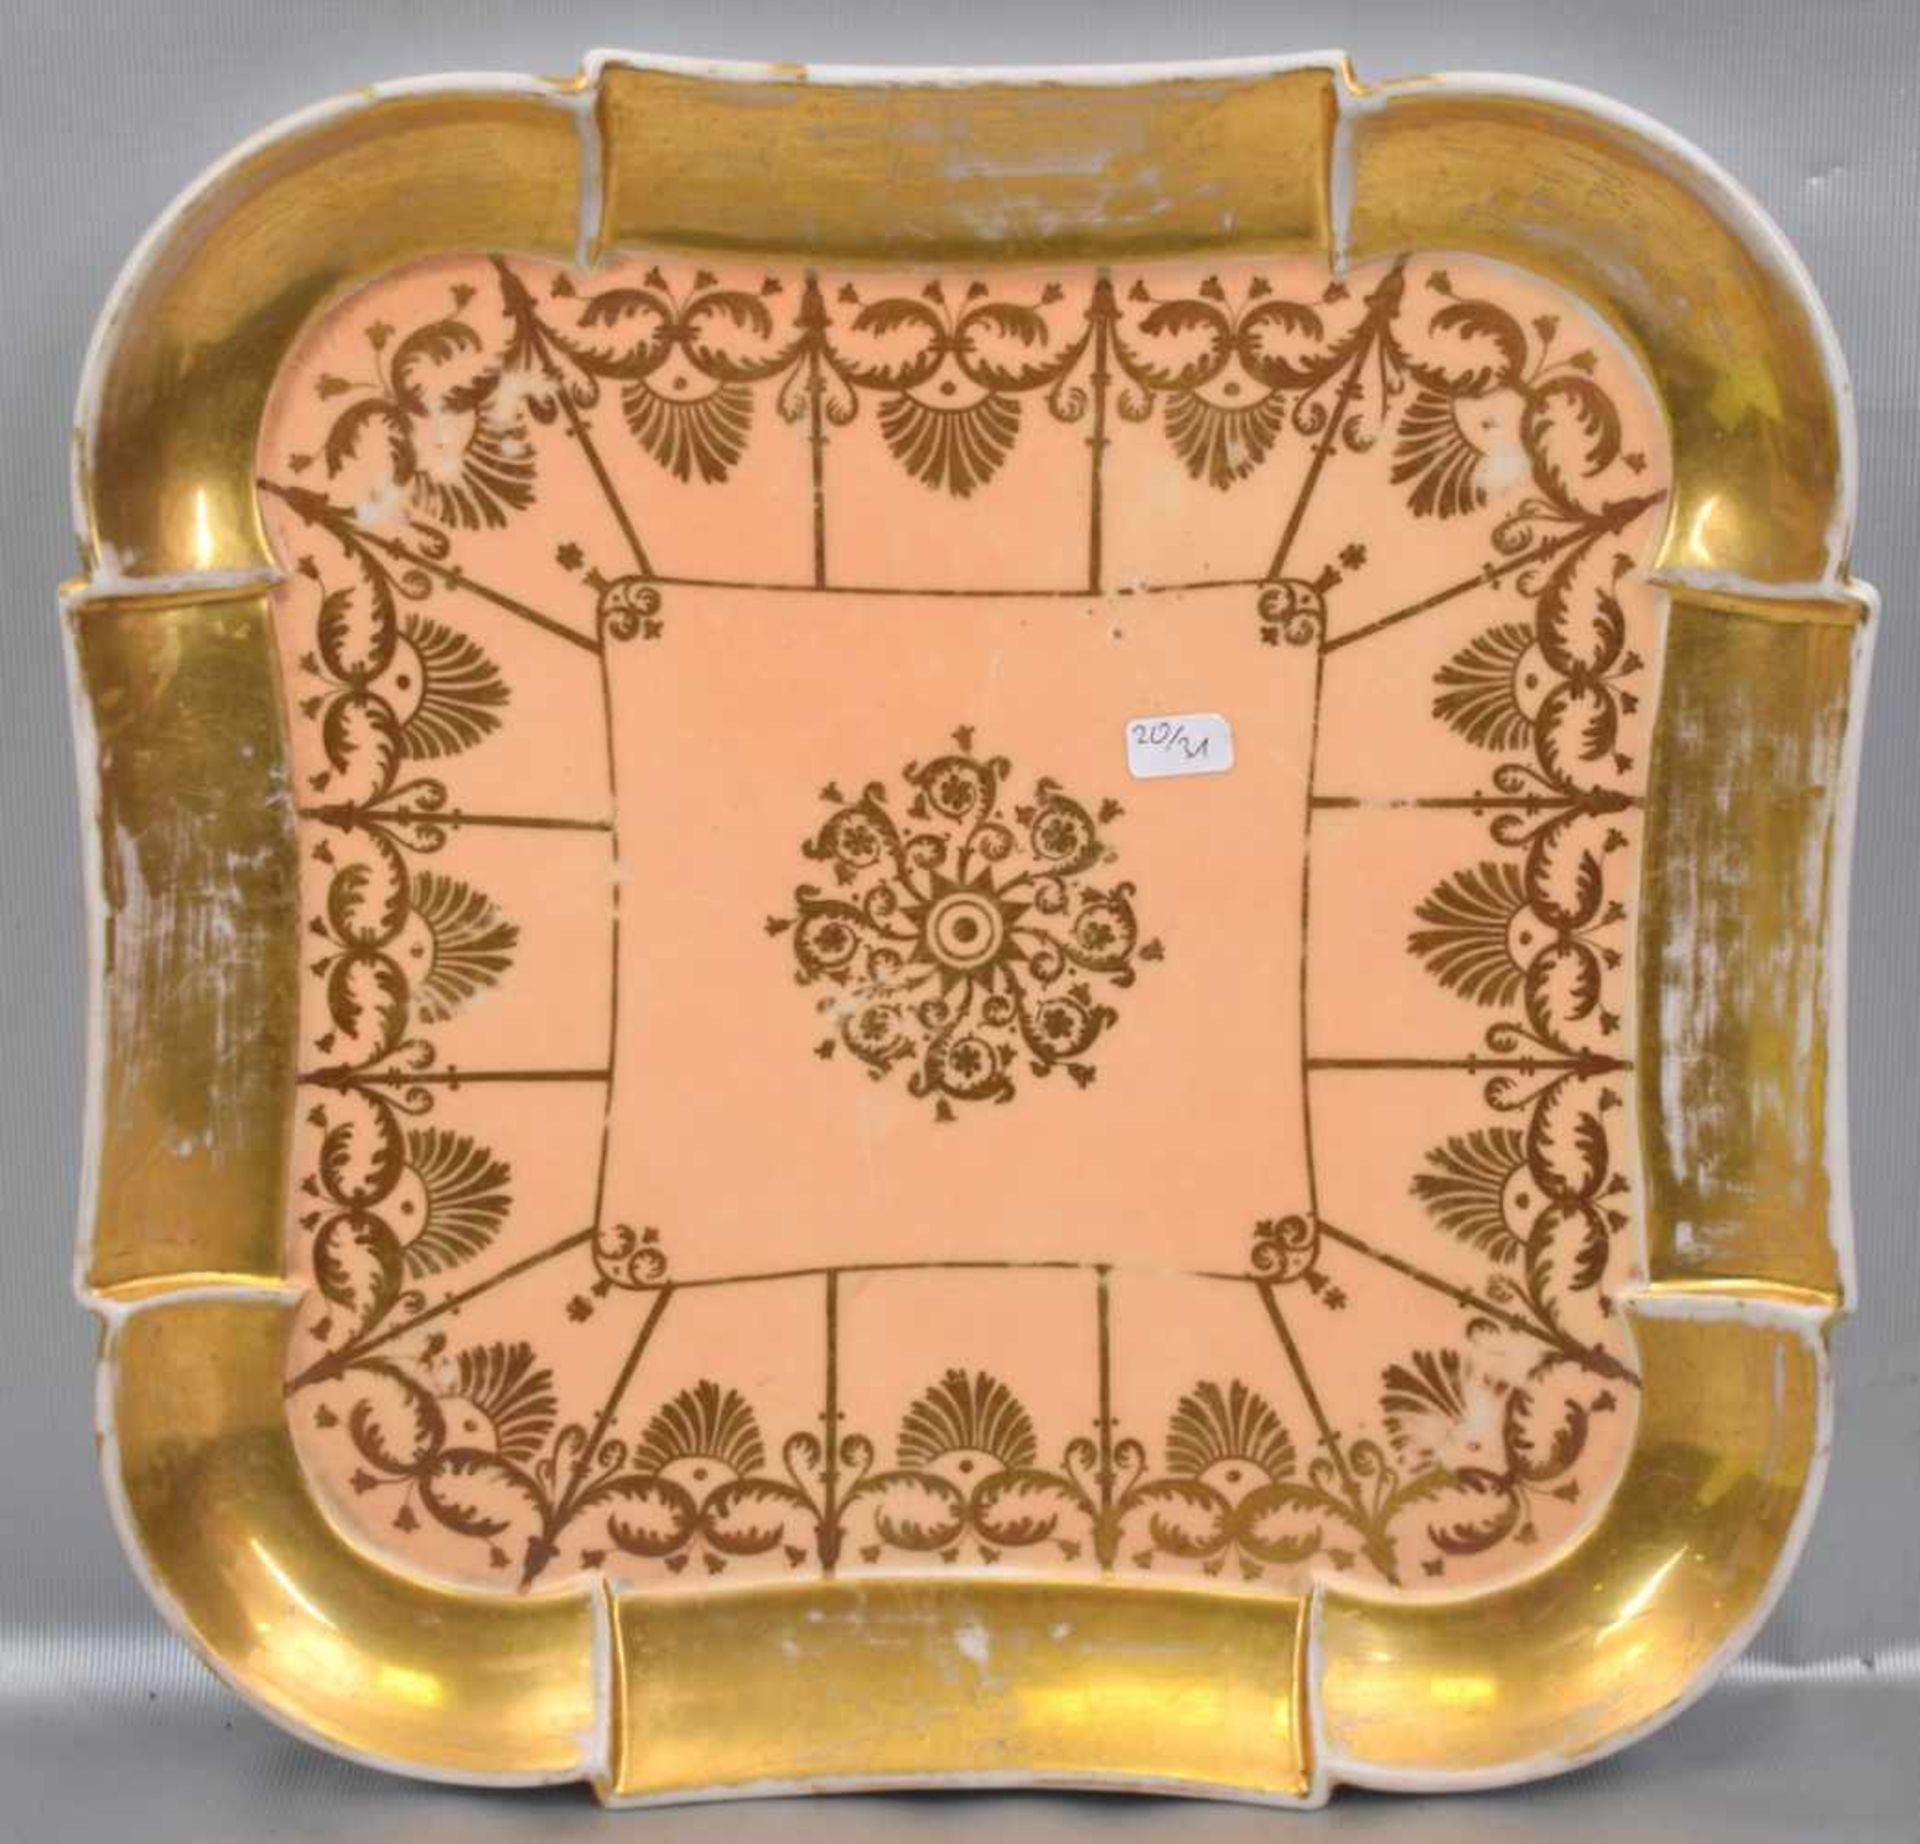 Anbietplattequadratisch, breiter Goldrand, Spiegel mit Barock-Ornamenten gold bemalt, 30 X 30 cm,